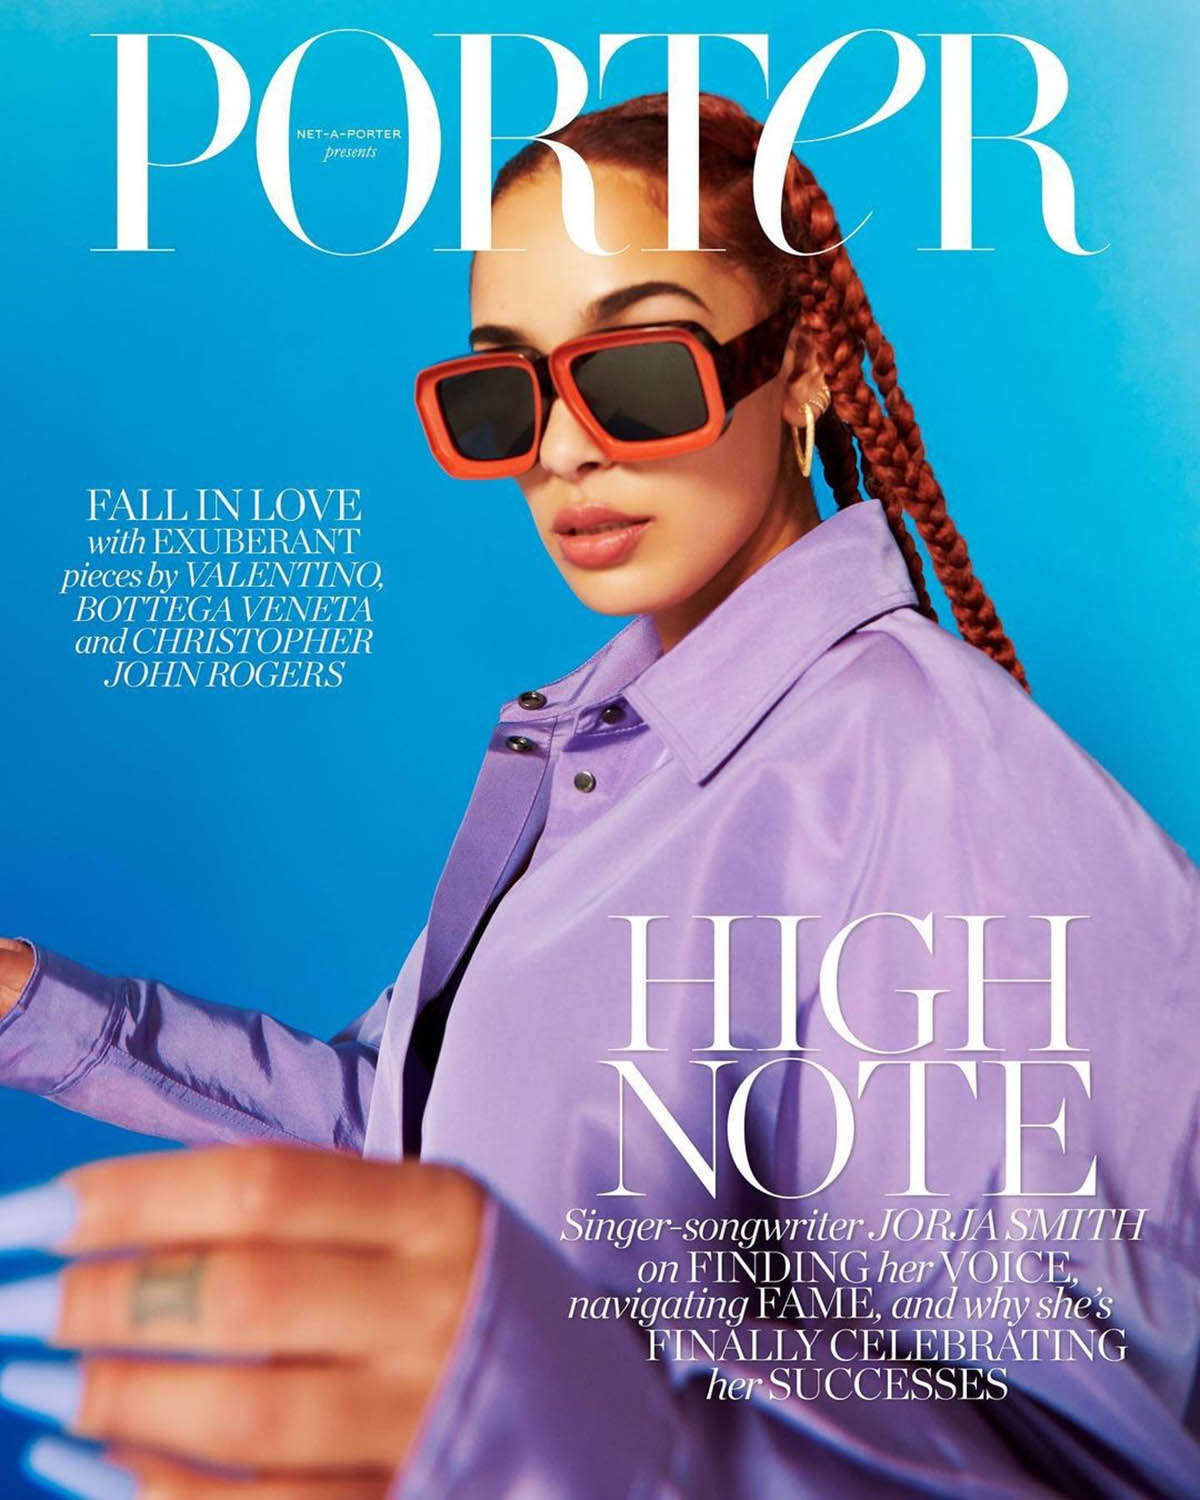 Jorja Smith covers Porter Magazine May 3rd, 2021 by Danika Magdelena